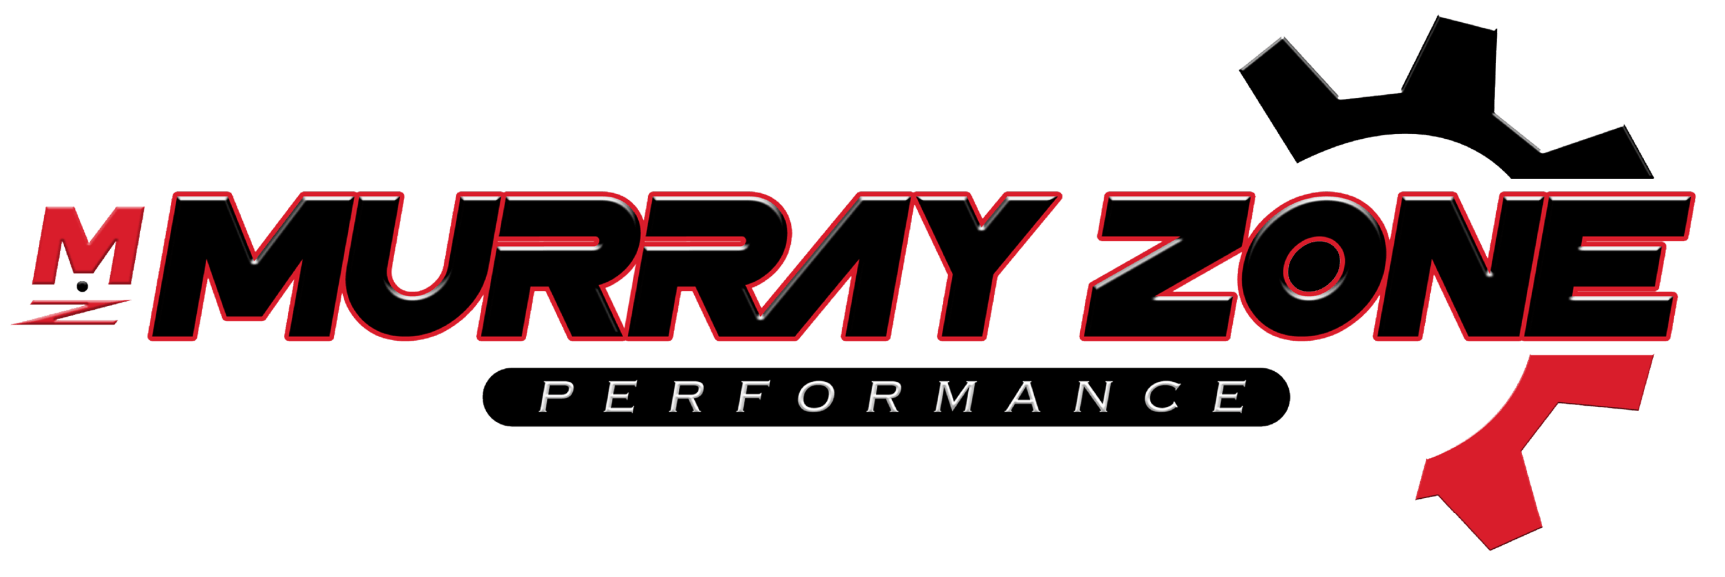 murray_zone_logo